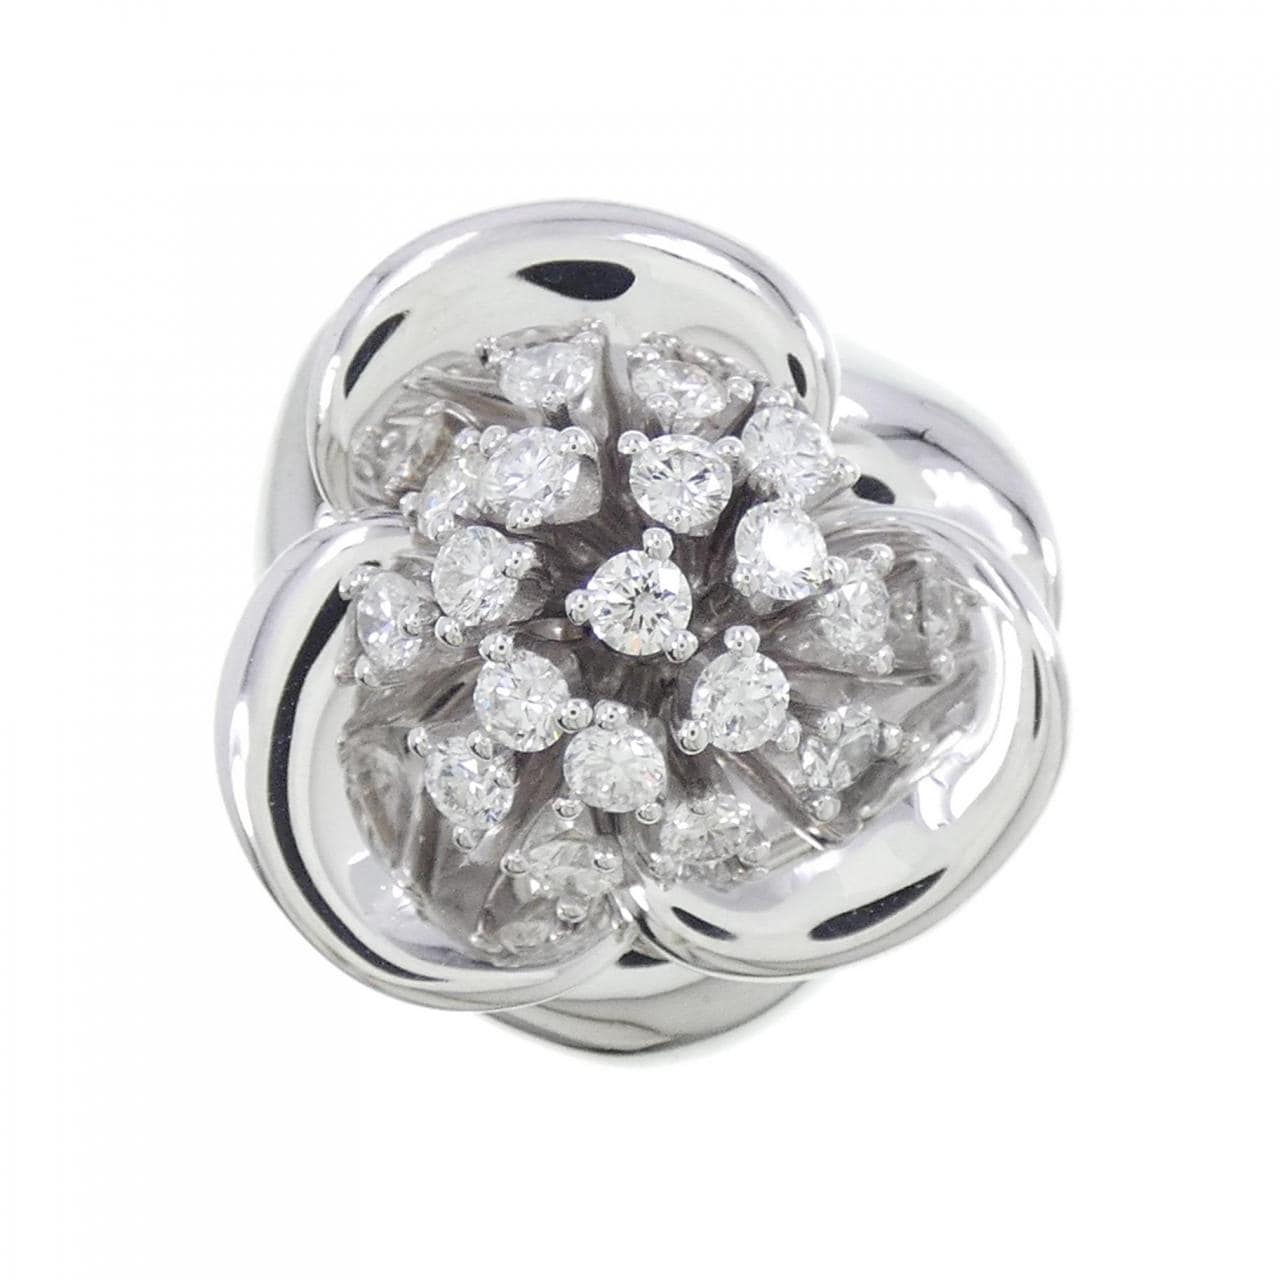 PONTE VECCHIO Flower Diamond Ring 0.95CT